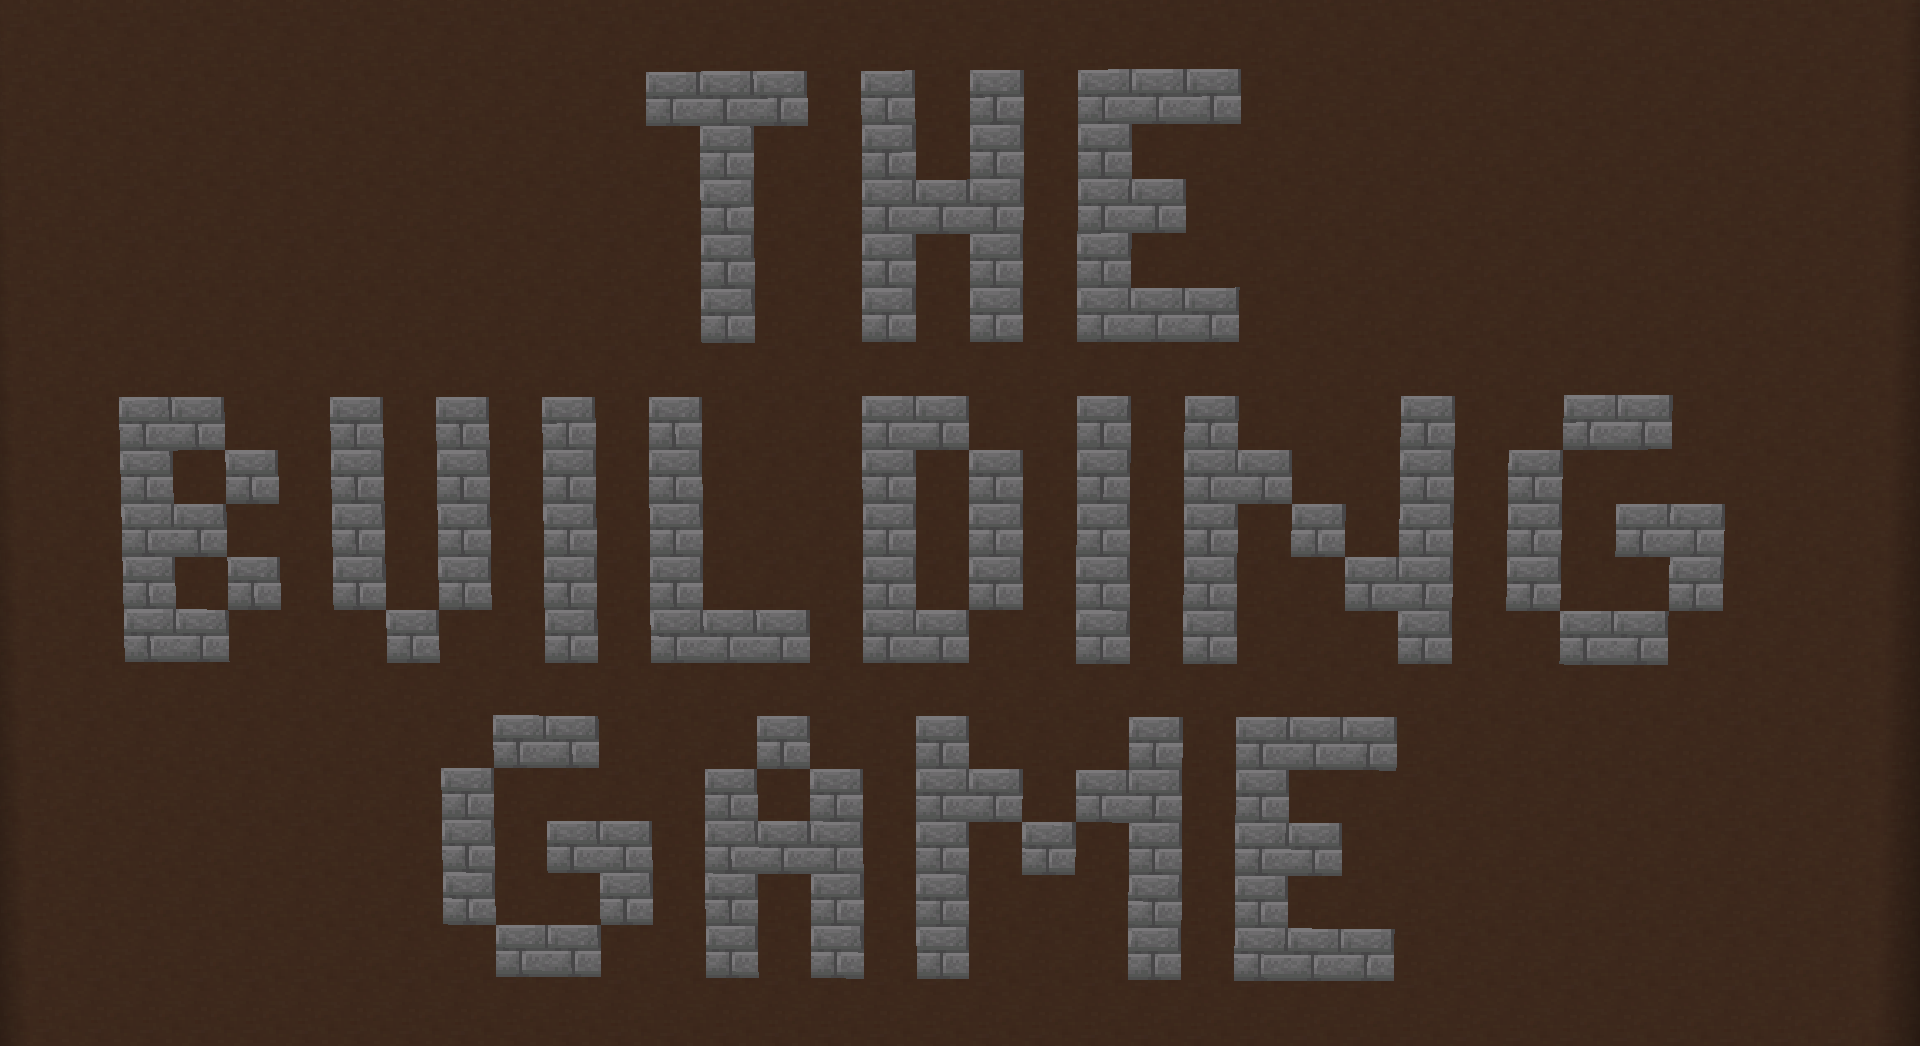 İndir The Building Game for 1.16 için Minecraft 1.16.4